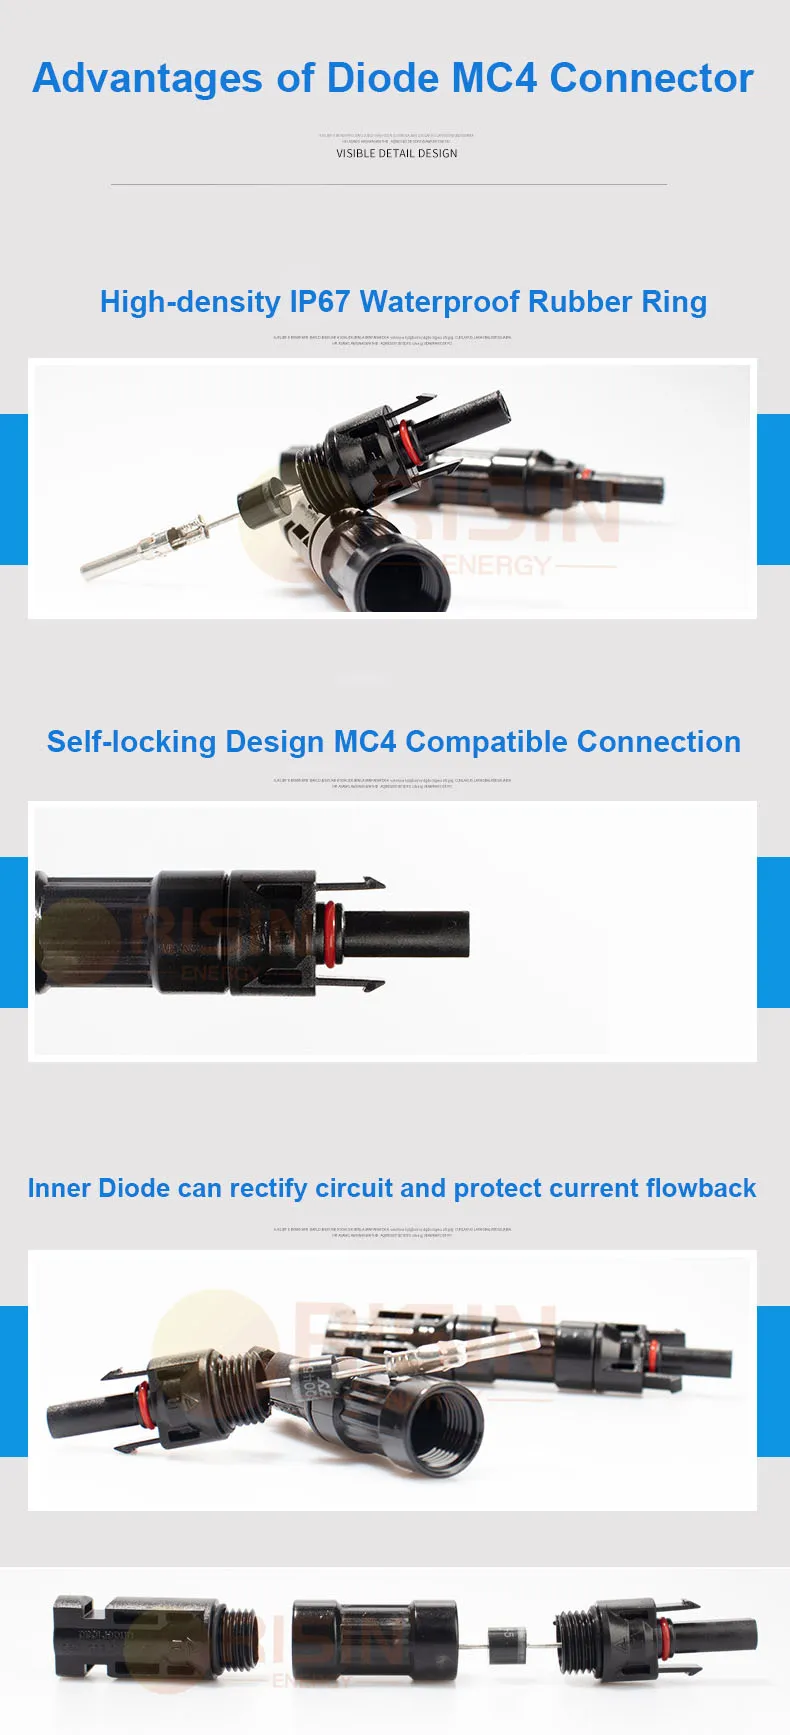 Diode MC4 advantages.jpg